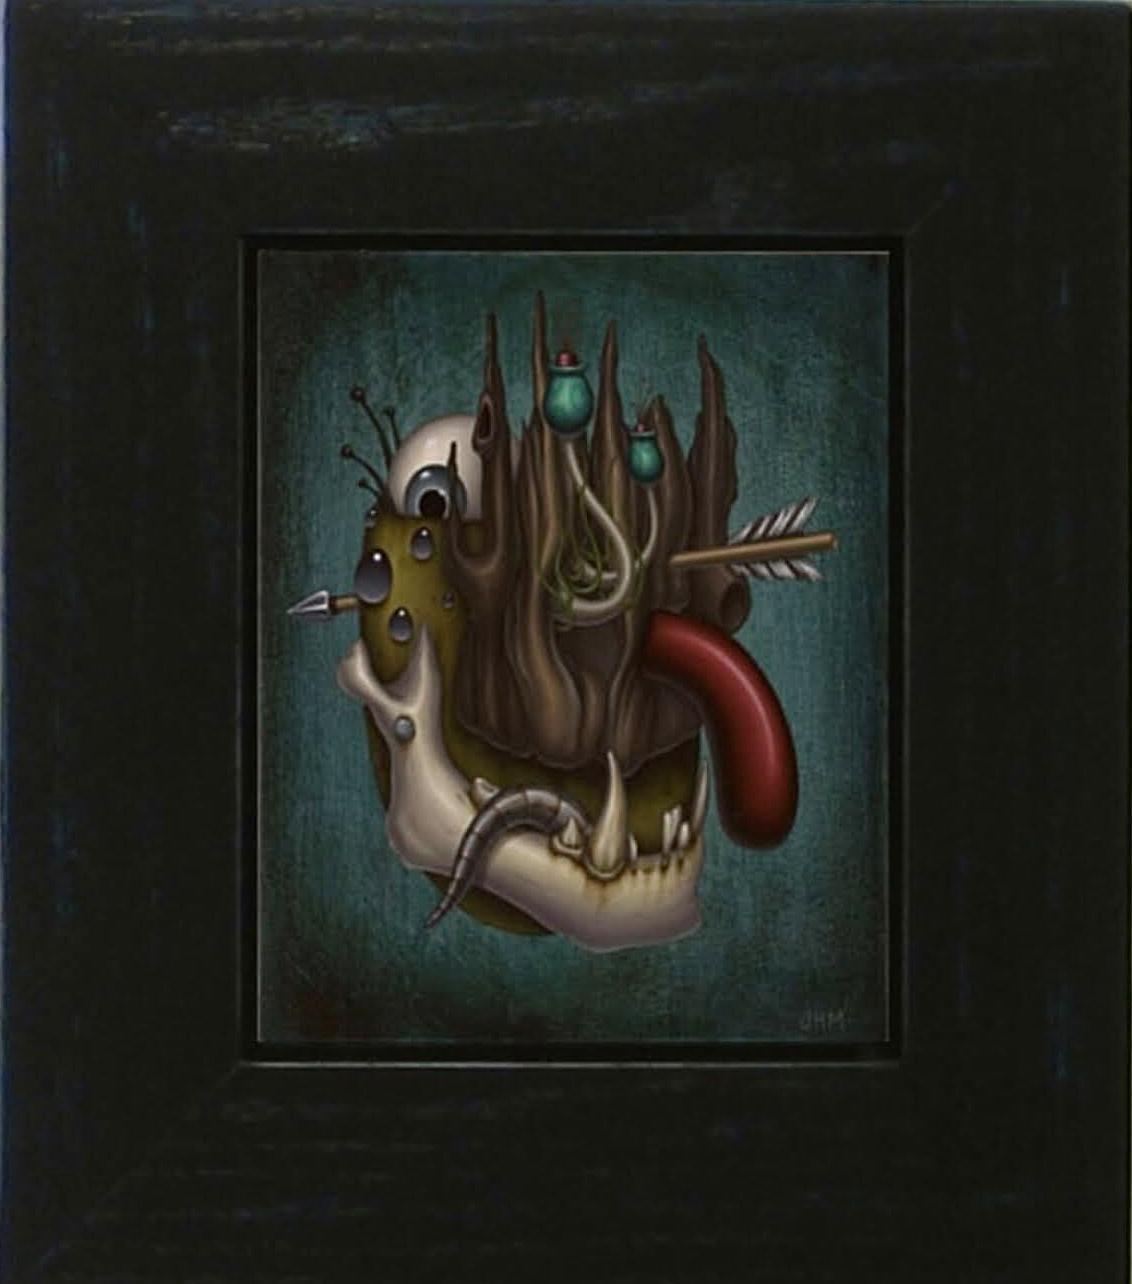 Justin Henry Miller, Counter Cupid Shlong Shaman, 2012, Oil on panel, 10” x 8”